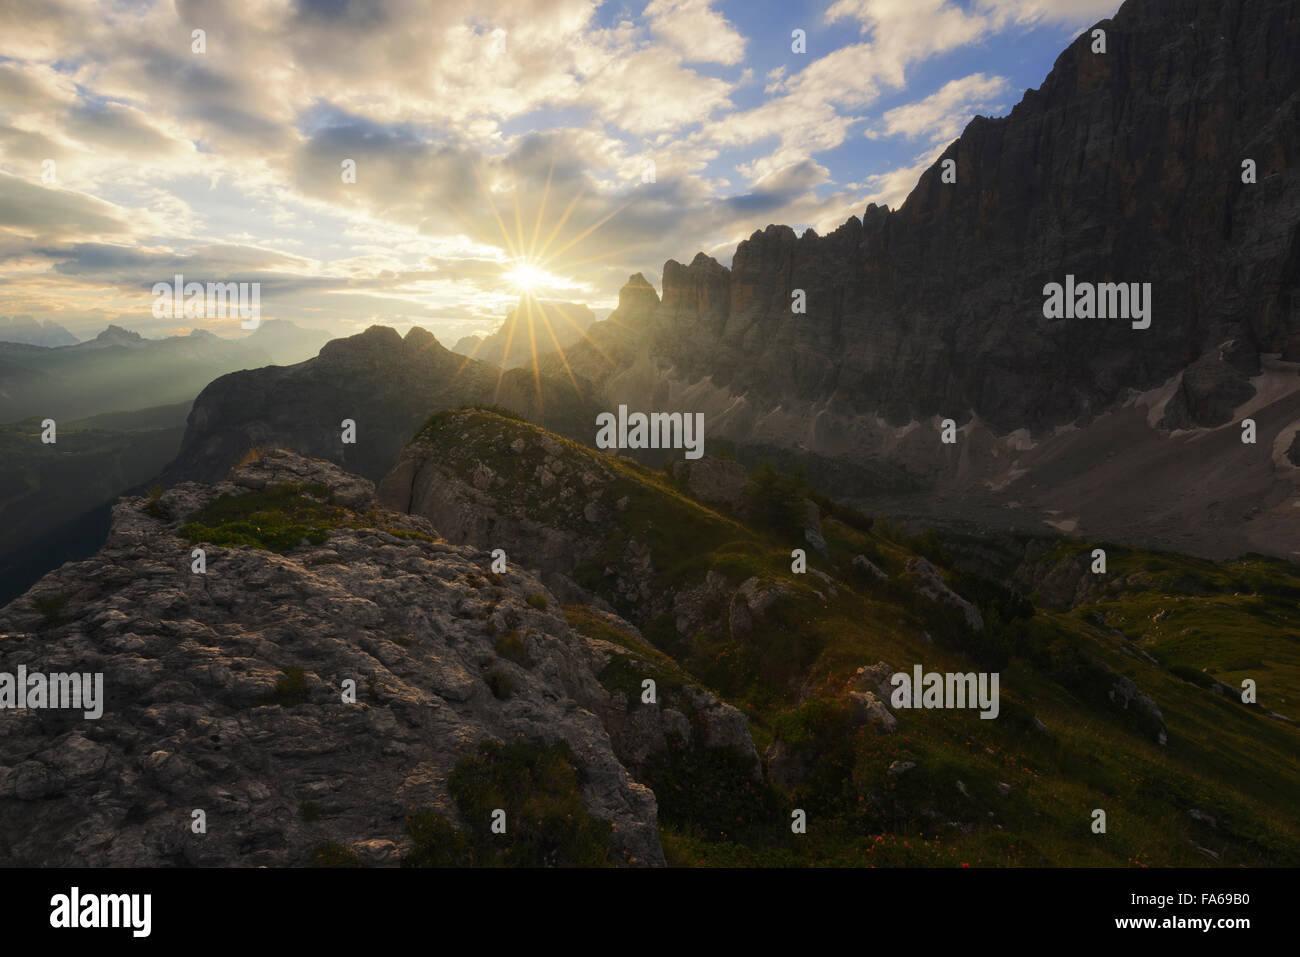 Coldai Pass at sunrise, Dolomites, Italy Stock Photo